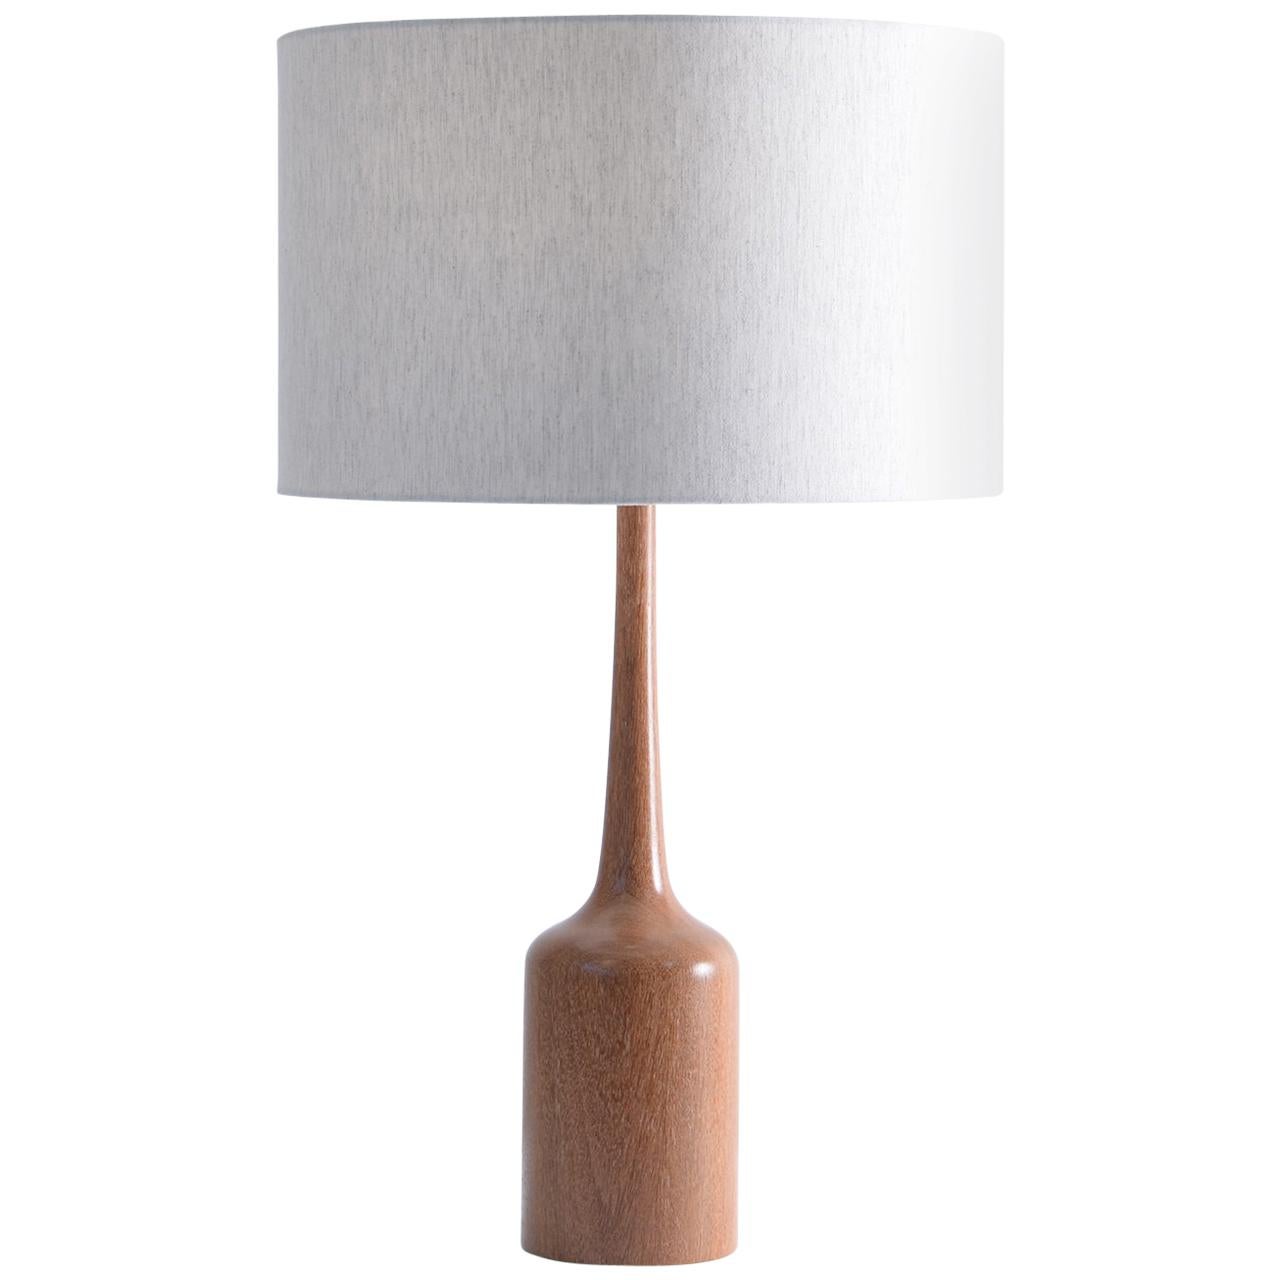 Morandi 3 Contemporary Minimalist Table Lamp in Brazilian Wood Cumarú.